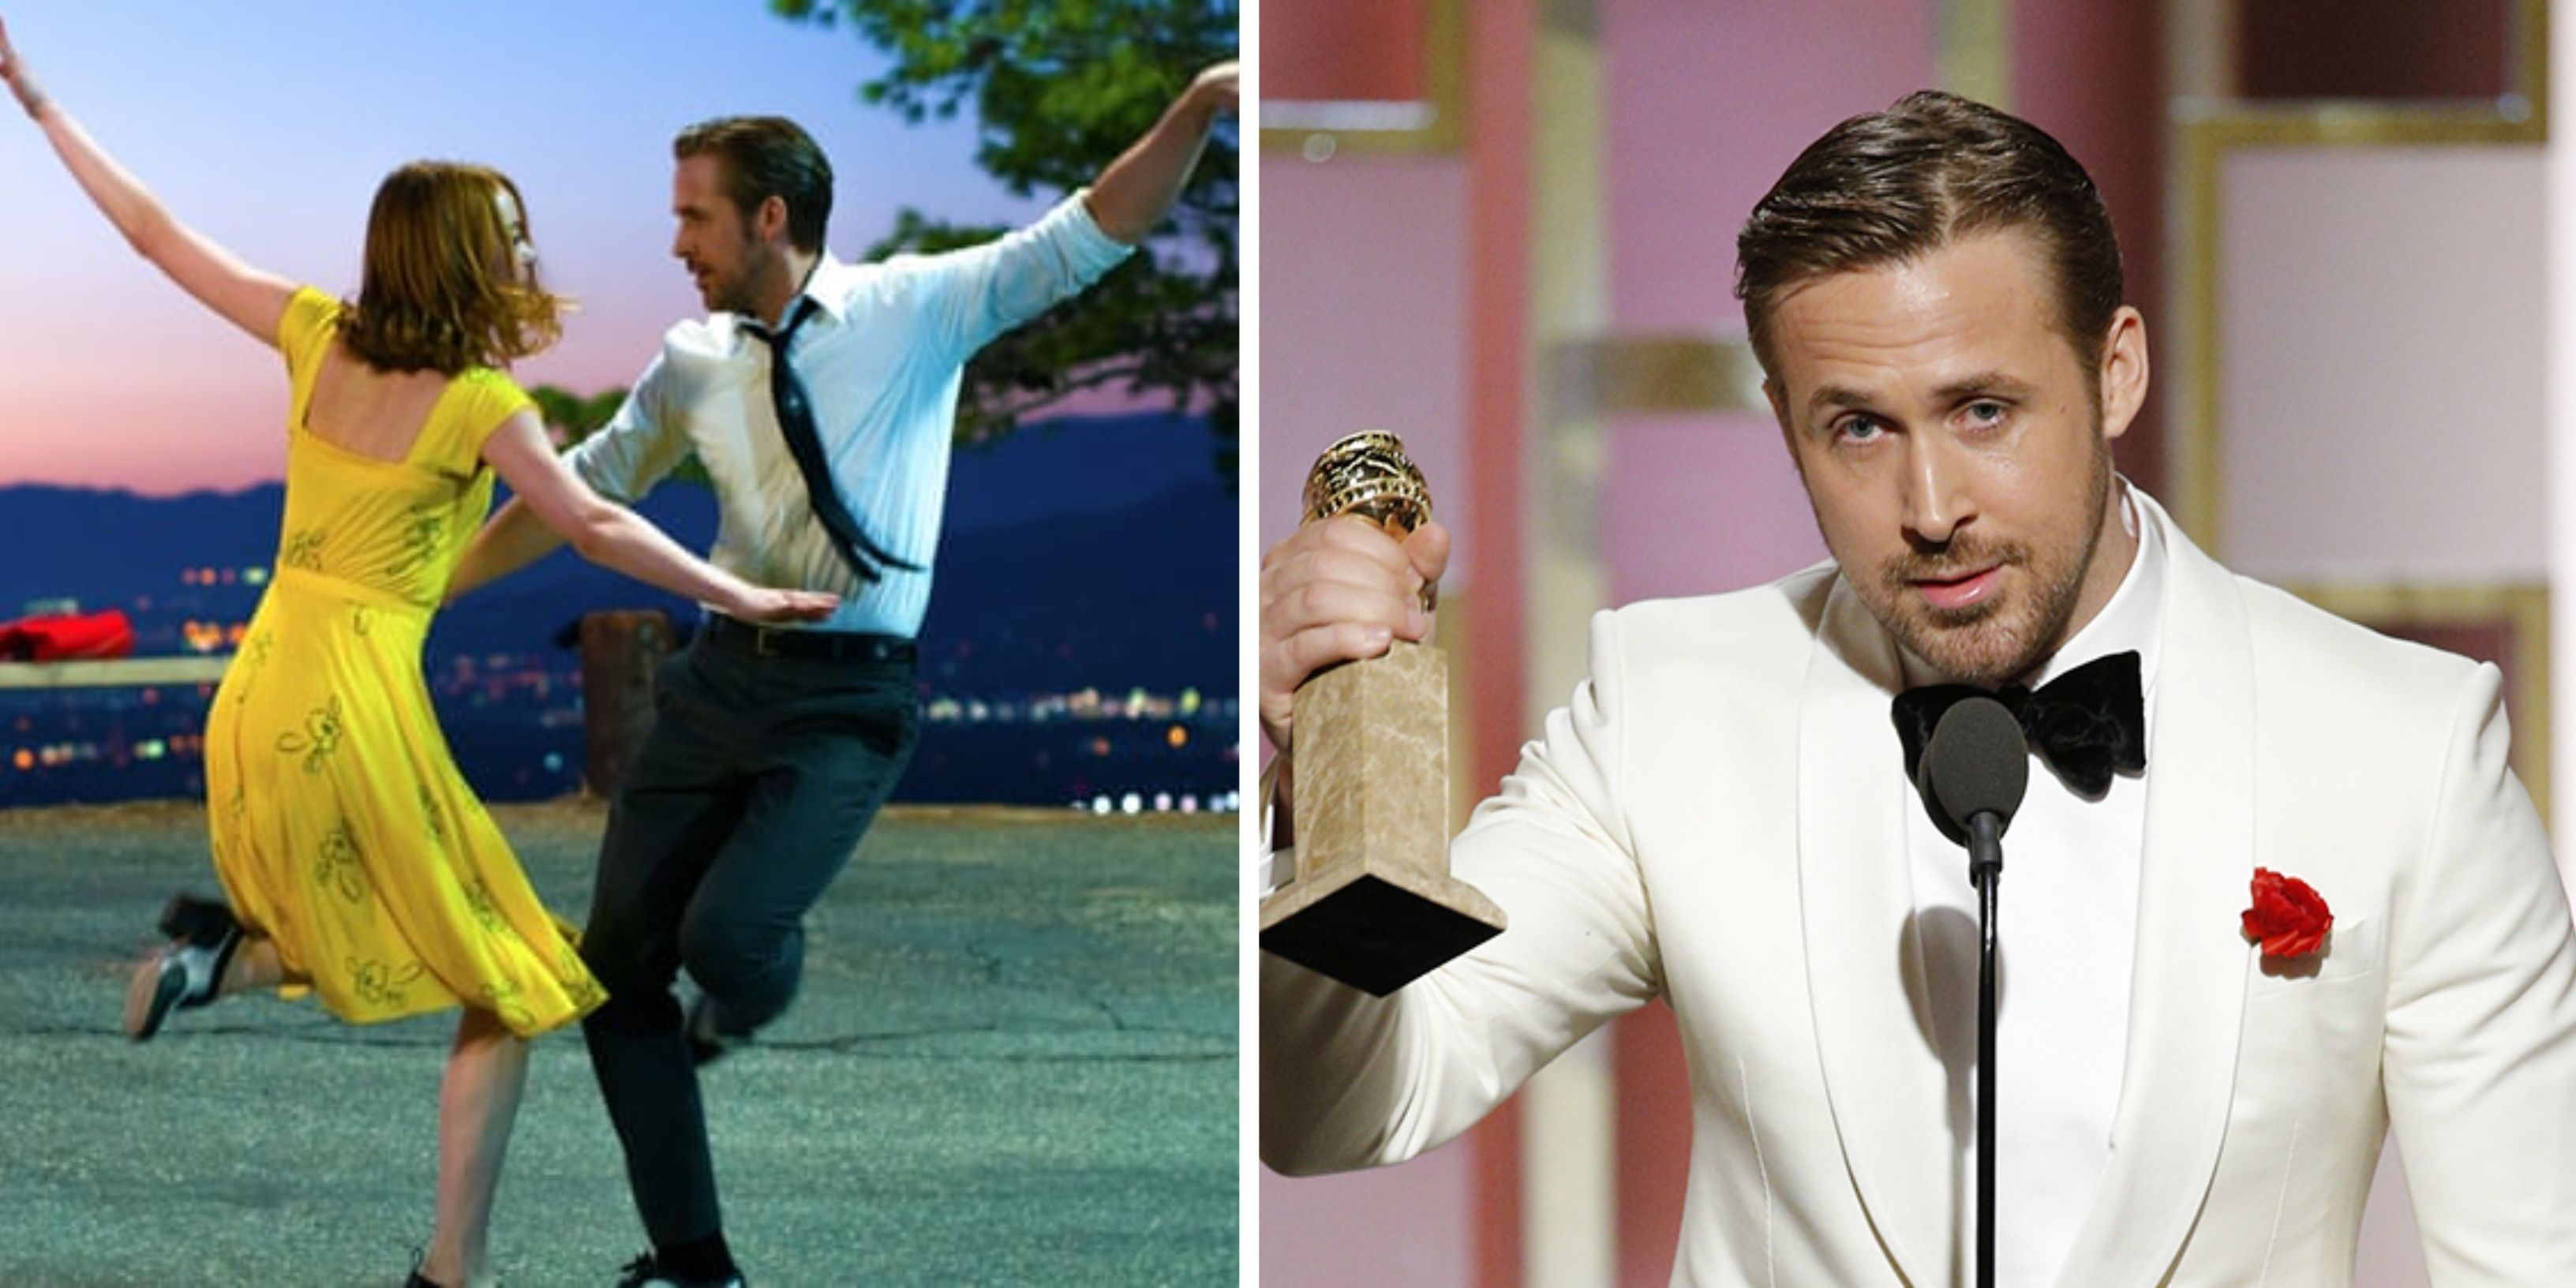 As maiores conquistas de Ryan Gosling desde 'The Notebook'